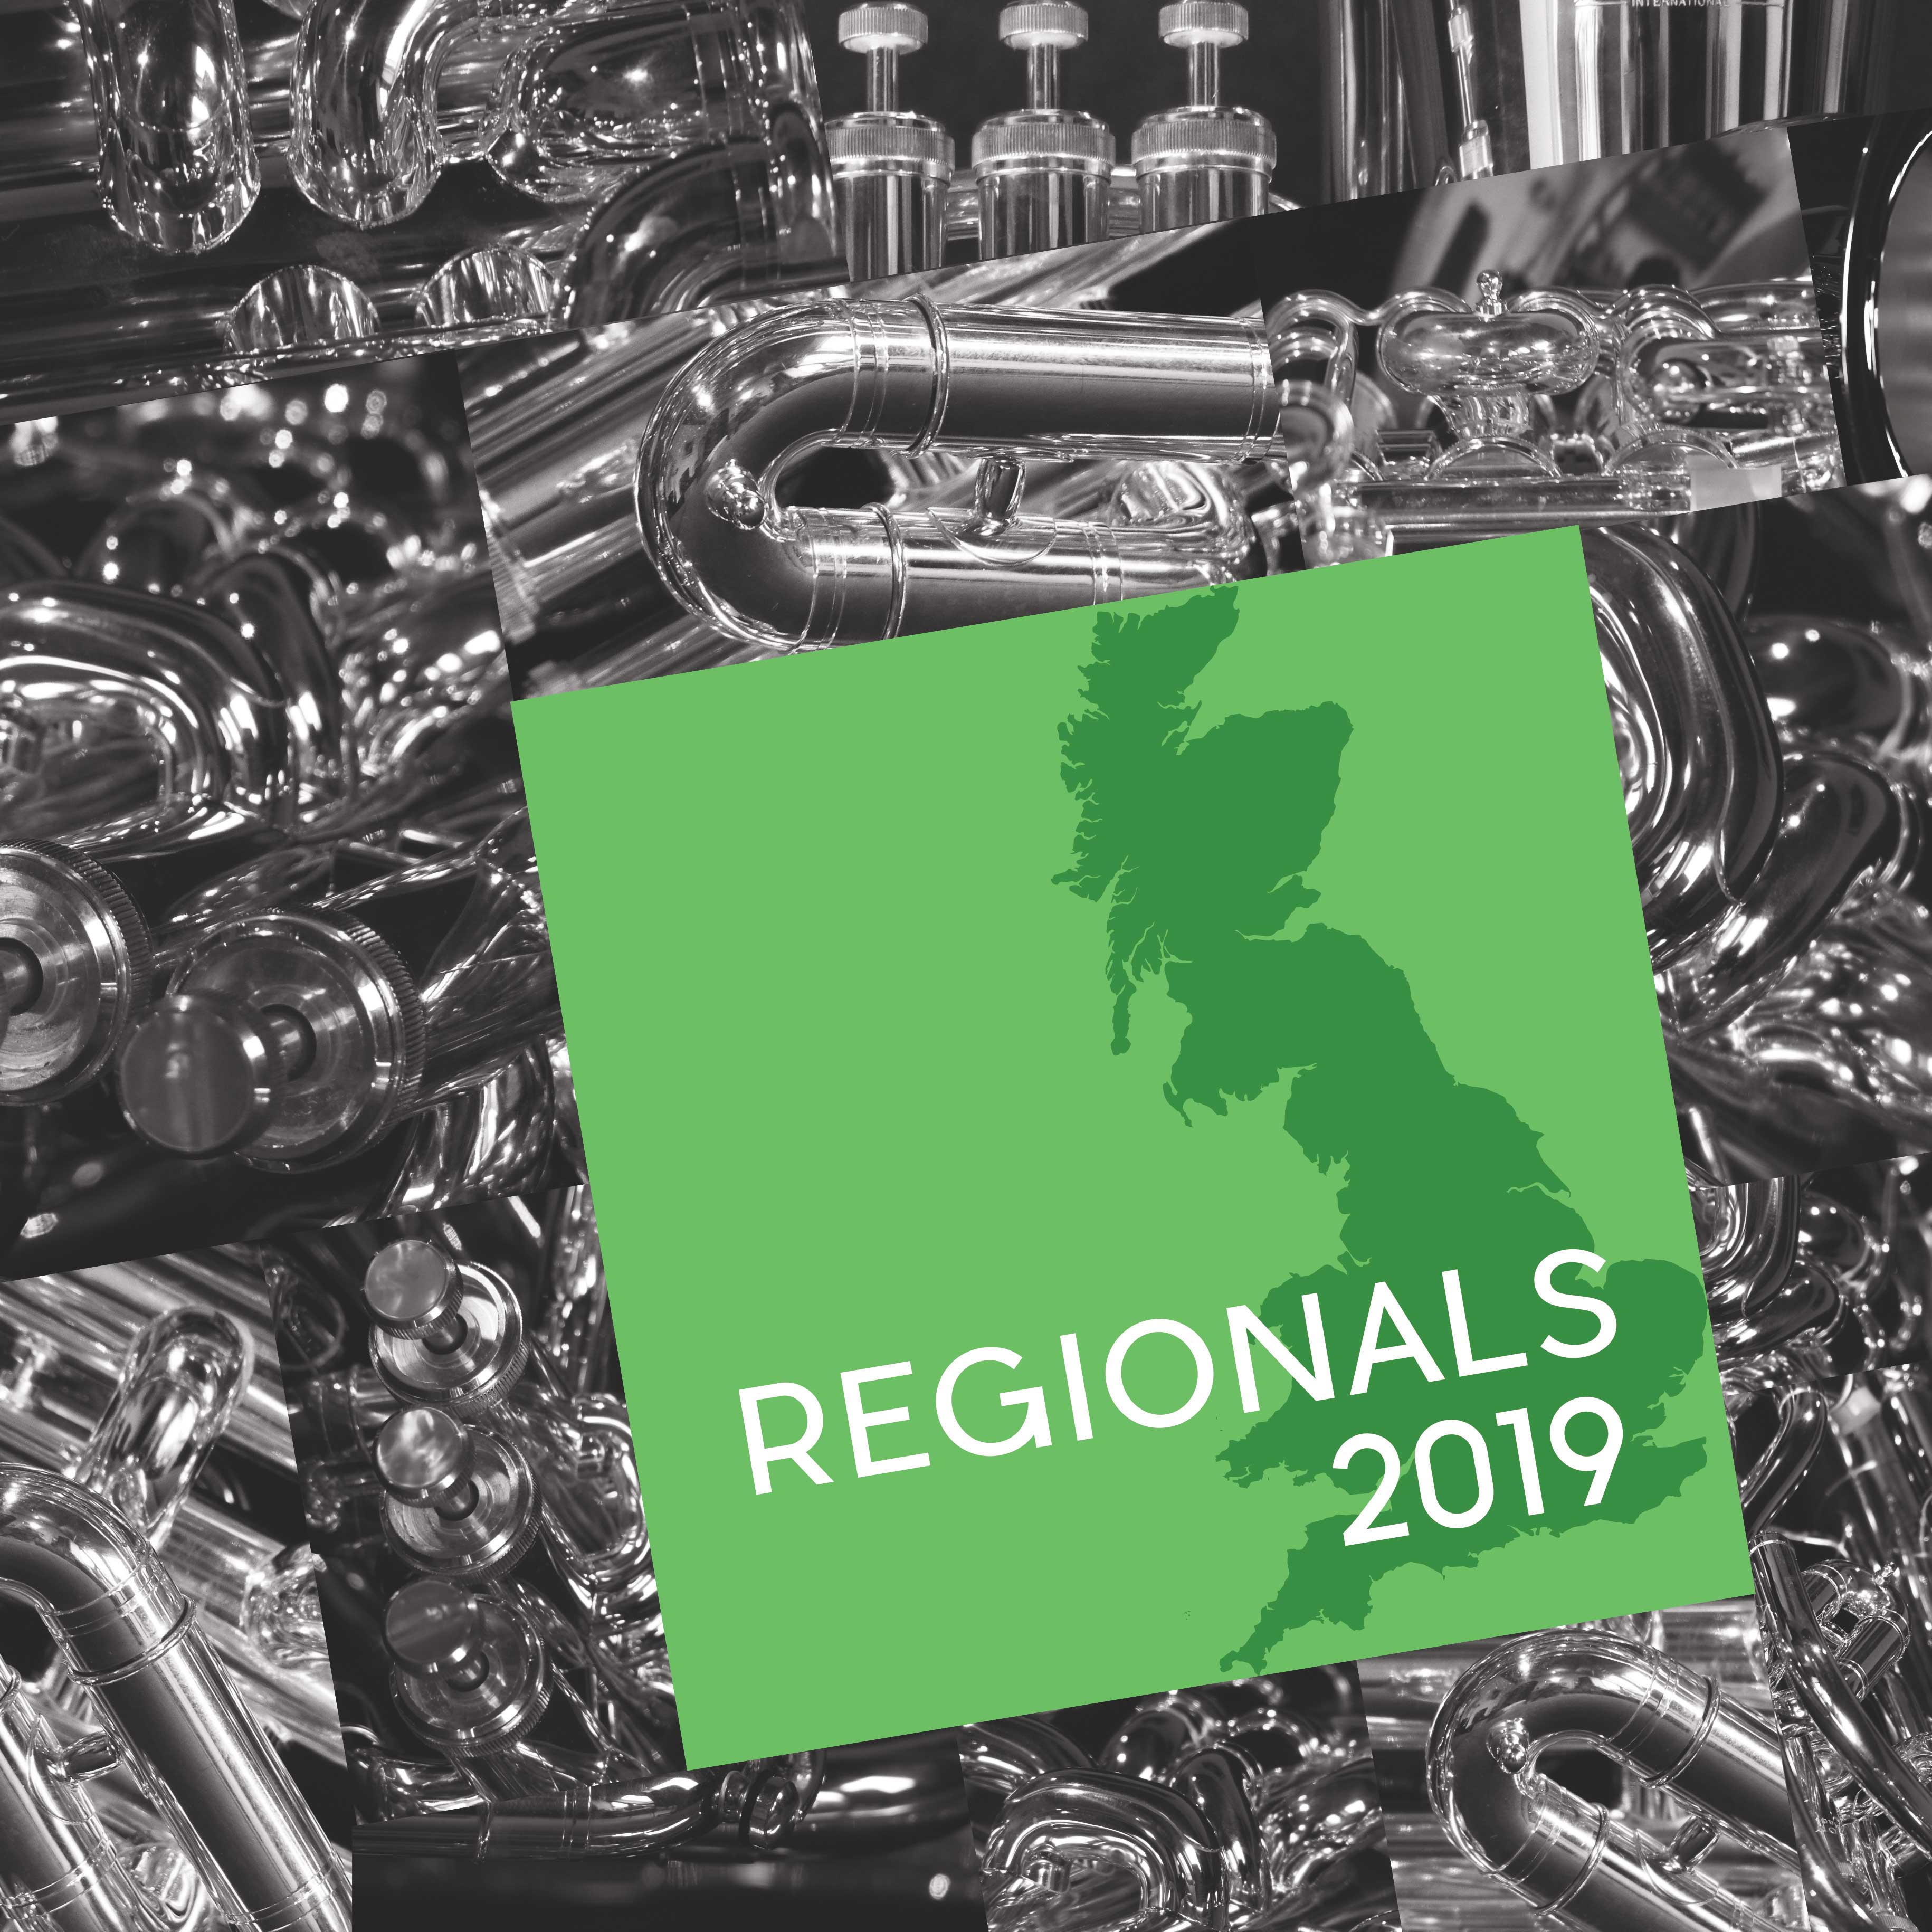 Regionals 2019 - Download